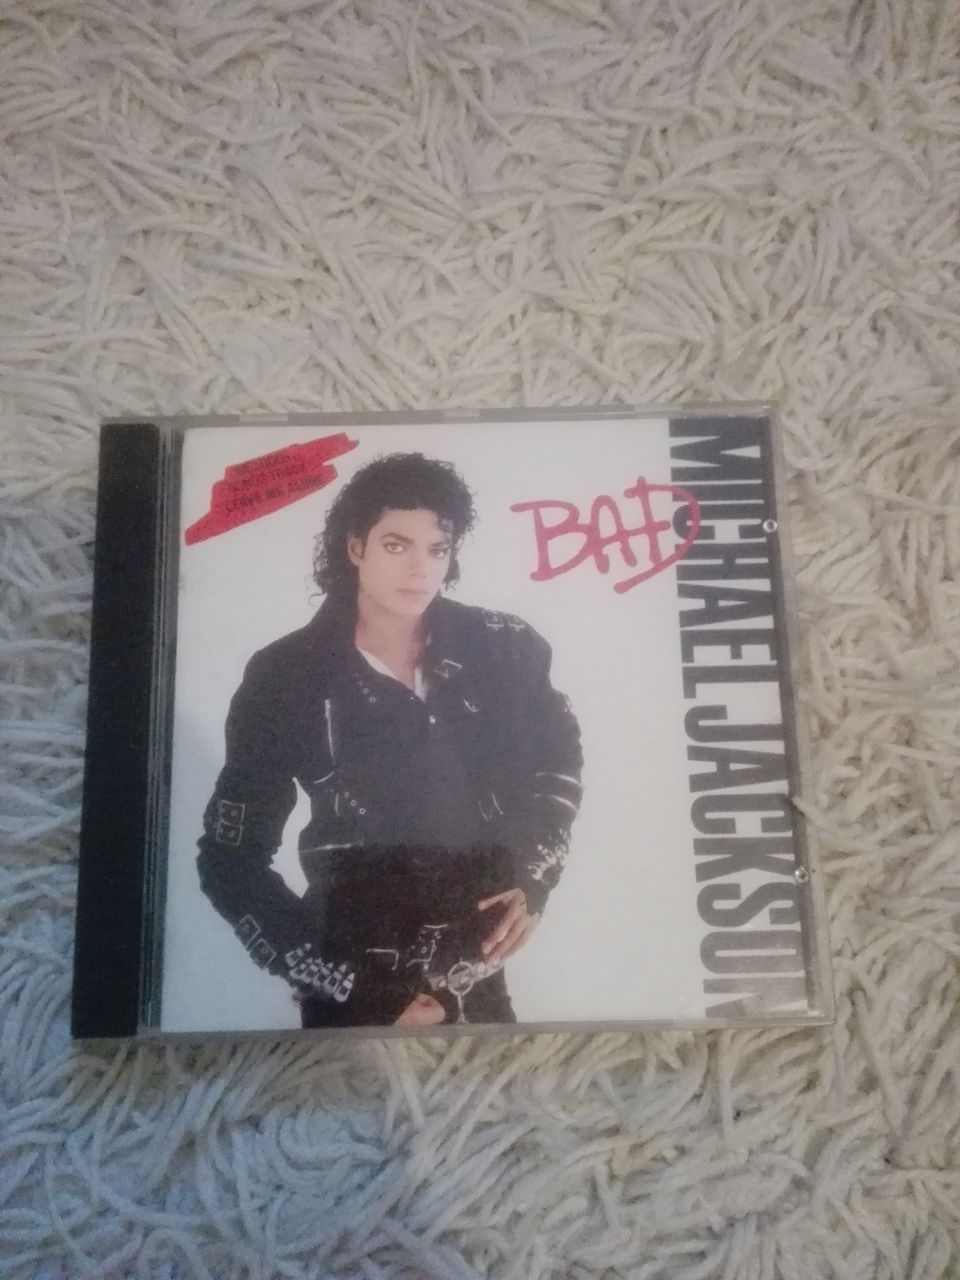 Bad by Michael Jackson (CD, 1987)